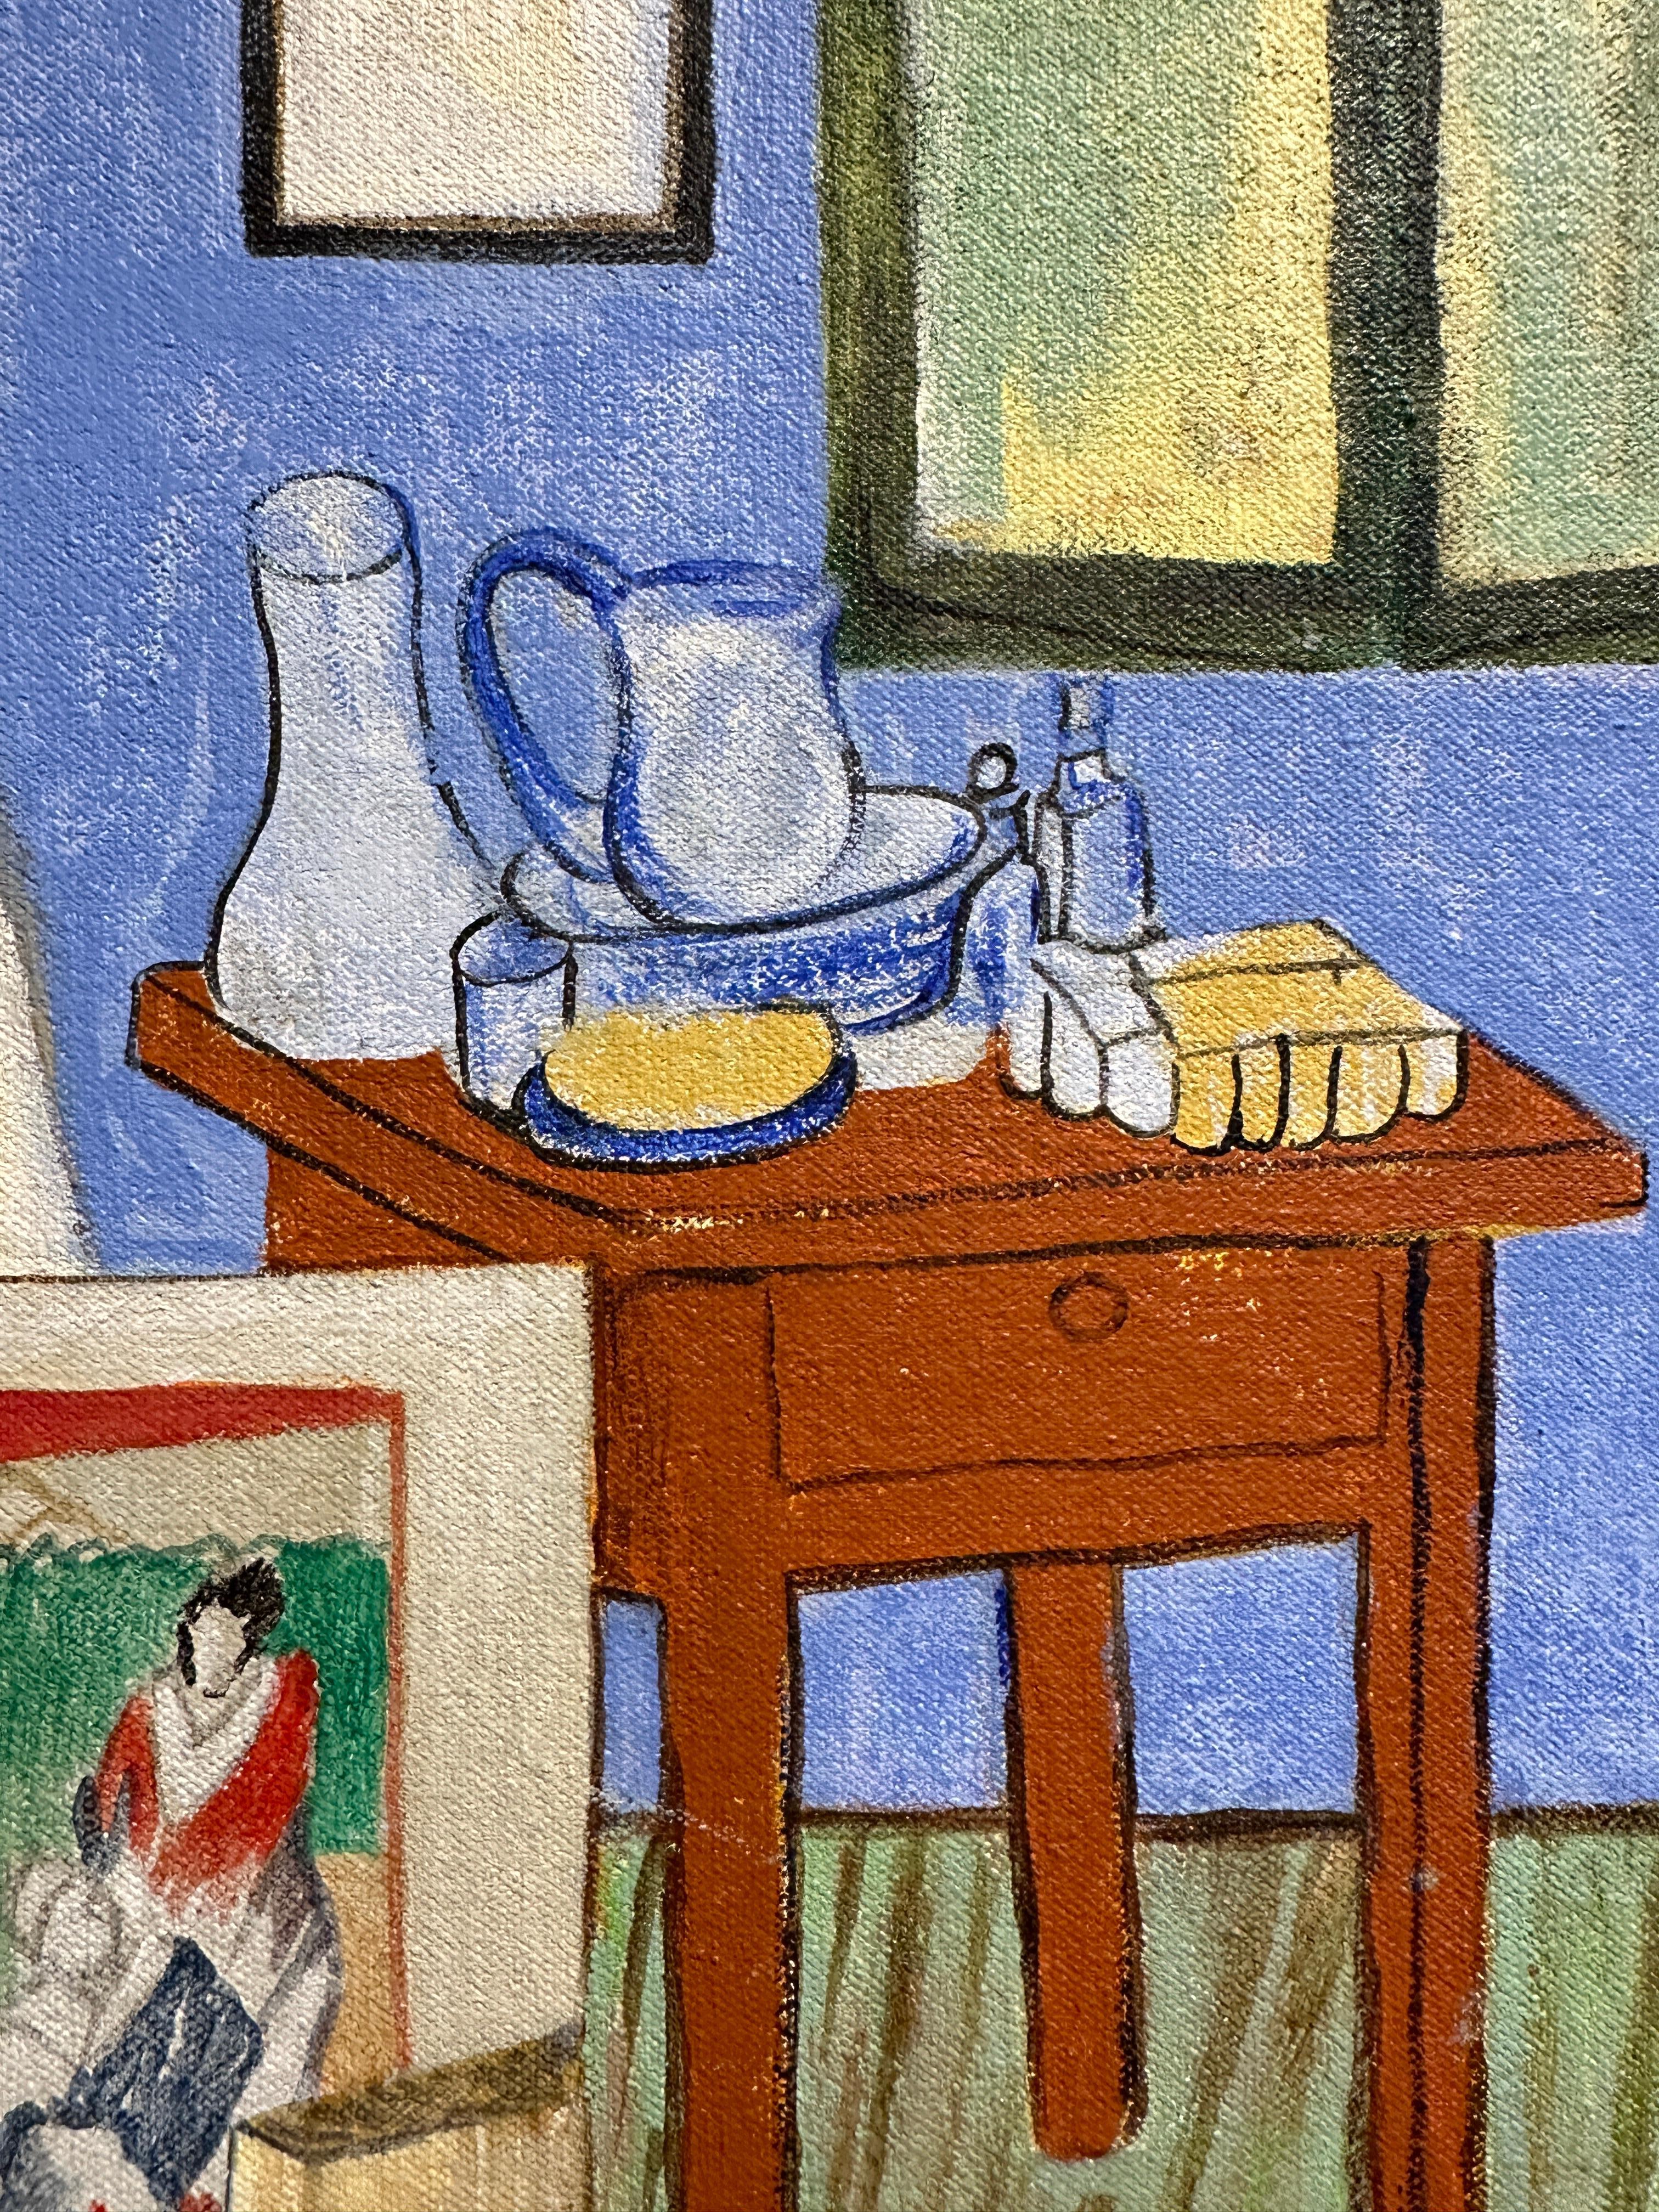 À travers les yeux de Van Gogh - Peinture d'un clou regardant dans la chambre de Van Gogh - Contemporain Painting par Marcos Raya